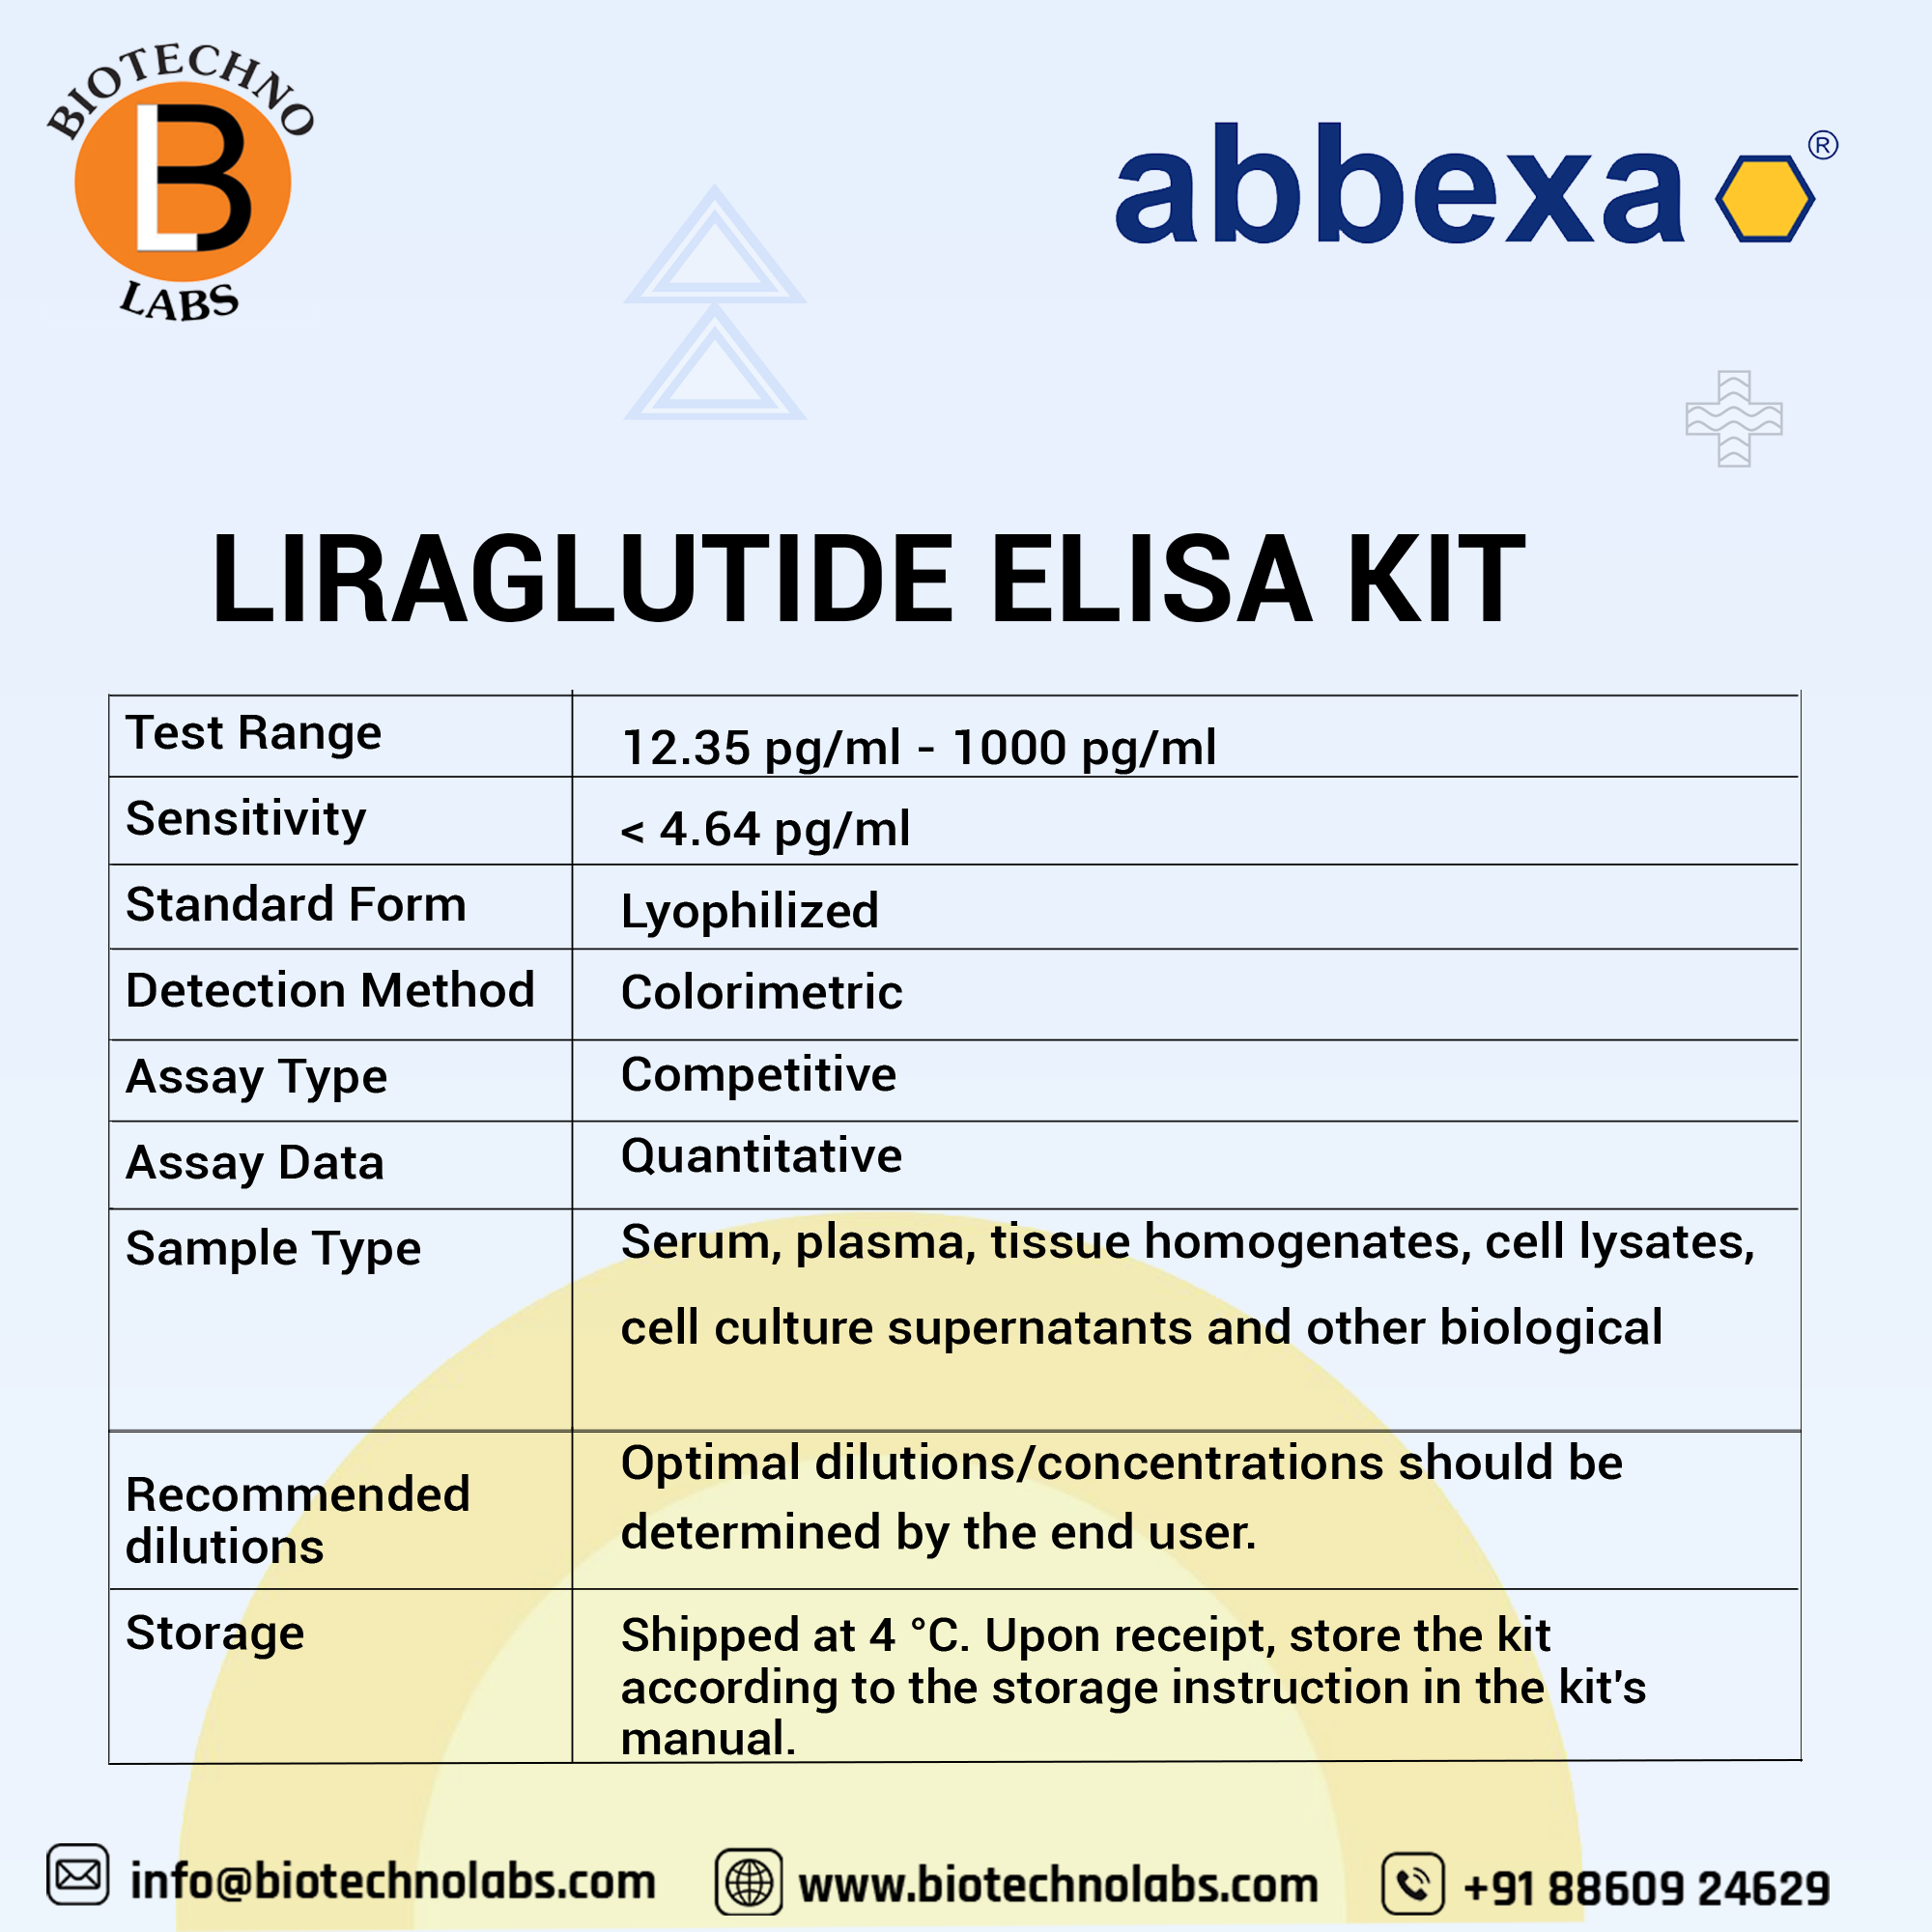 Abbexa introduce Liraglutide ELISA kit